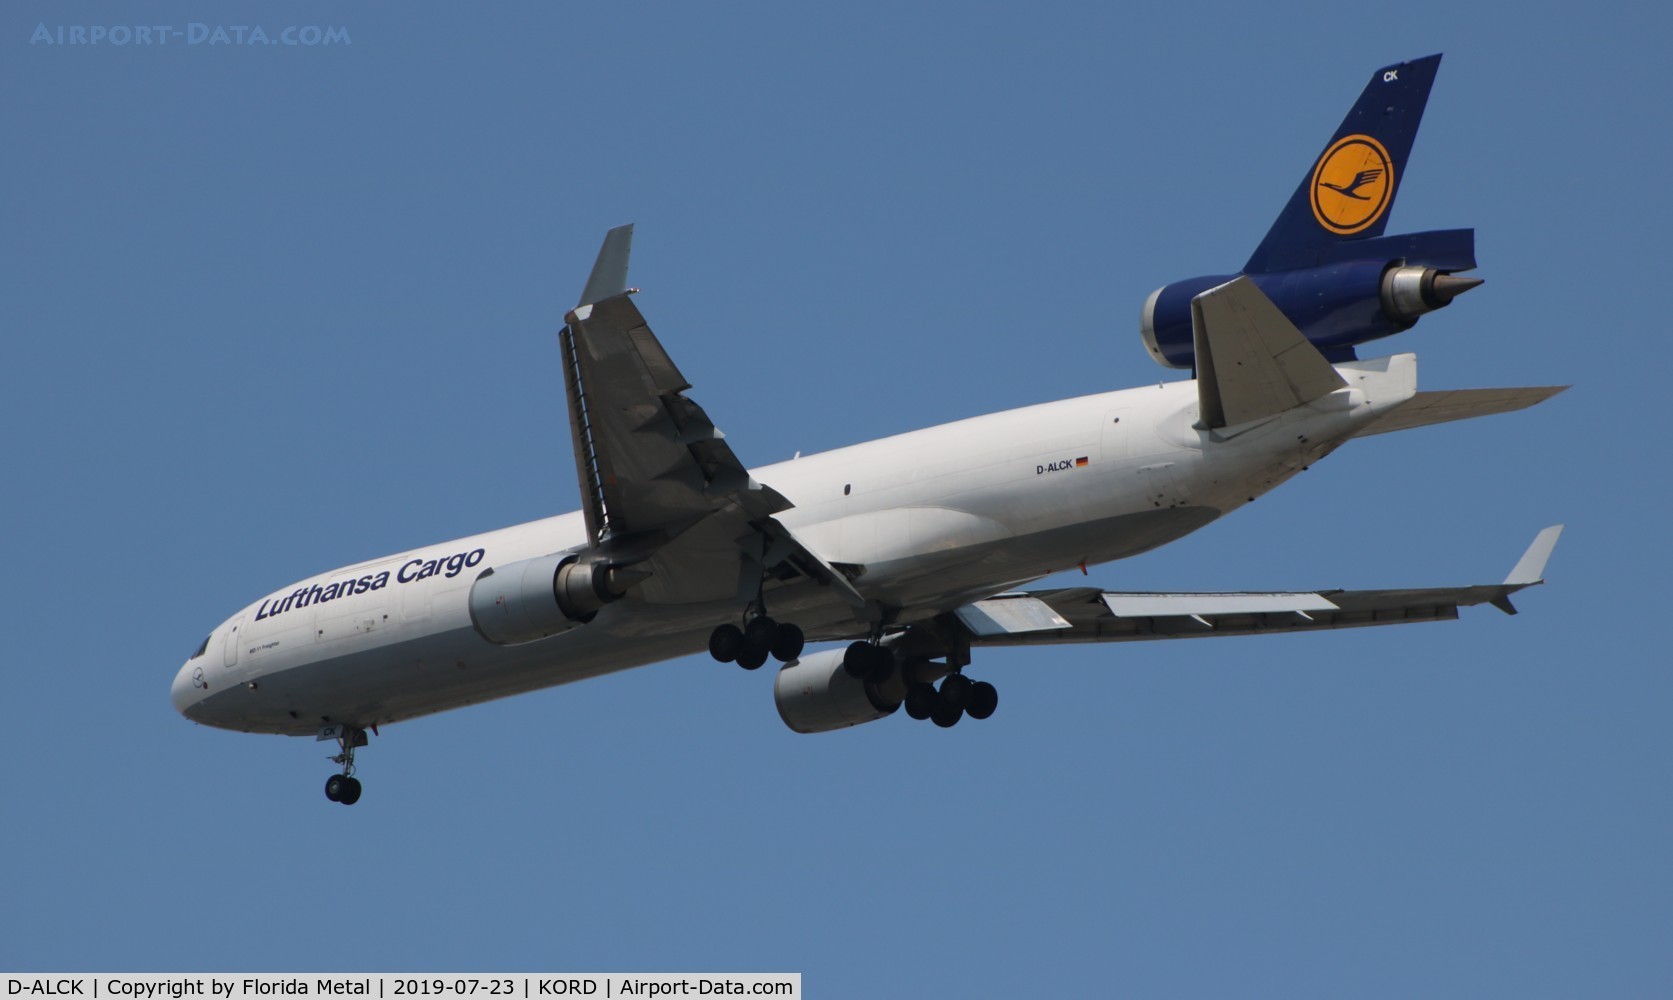 D-ALCK, 2000 McDonnell Douglas MD-11F C/N 48803, Lufthansa Cargo MD-11 zx